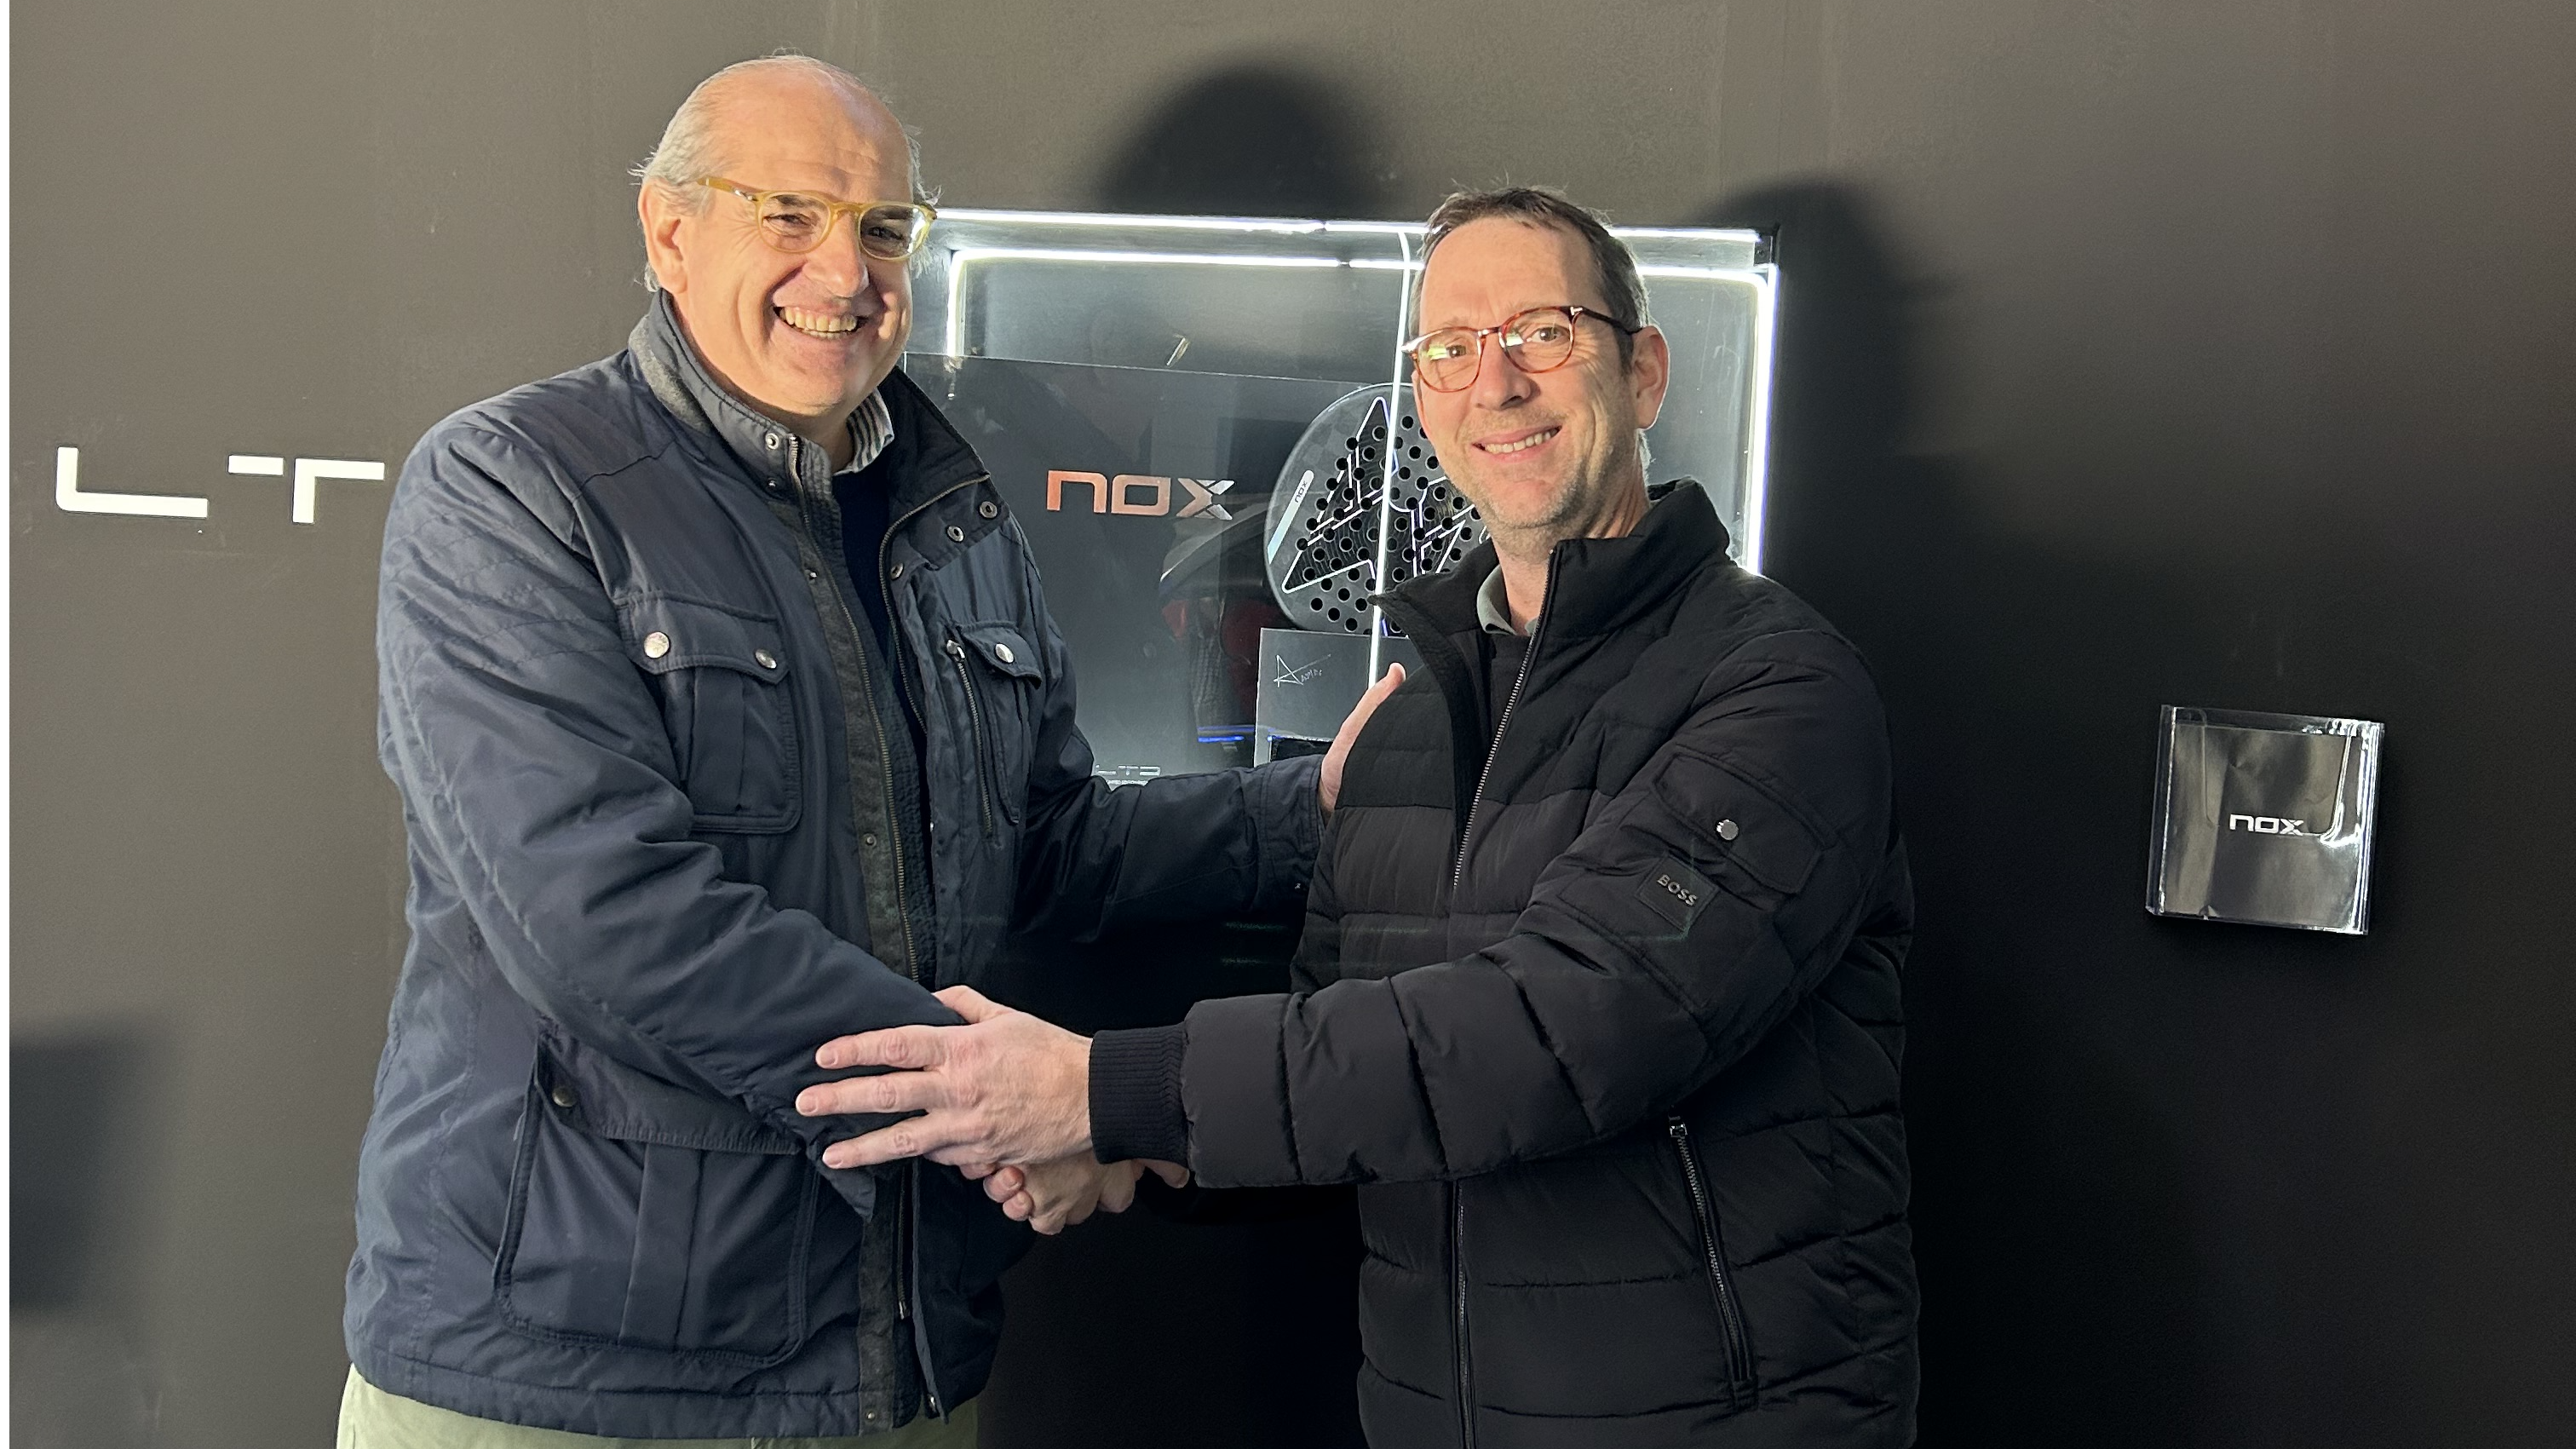 Nox confia à Start Distrib a distribuição na França